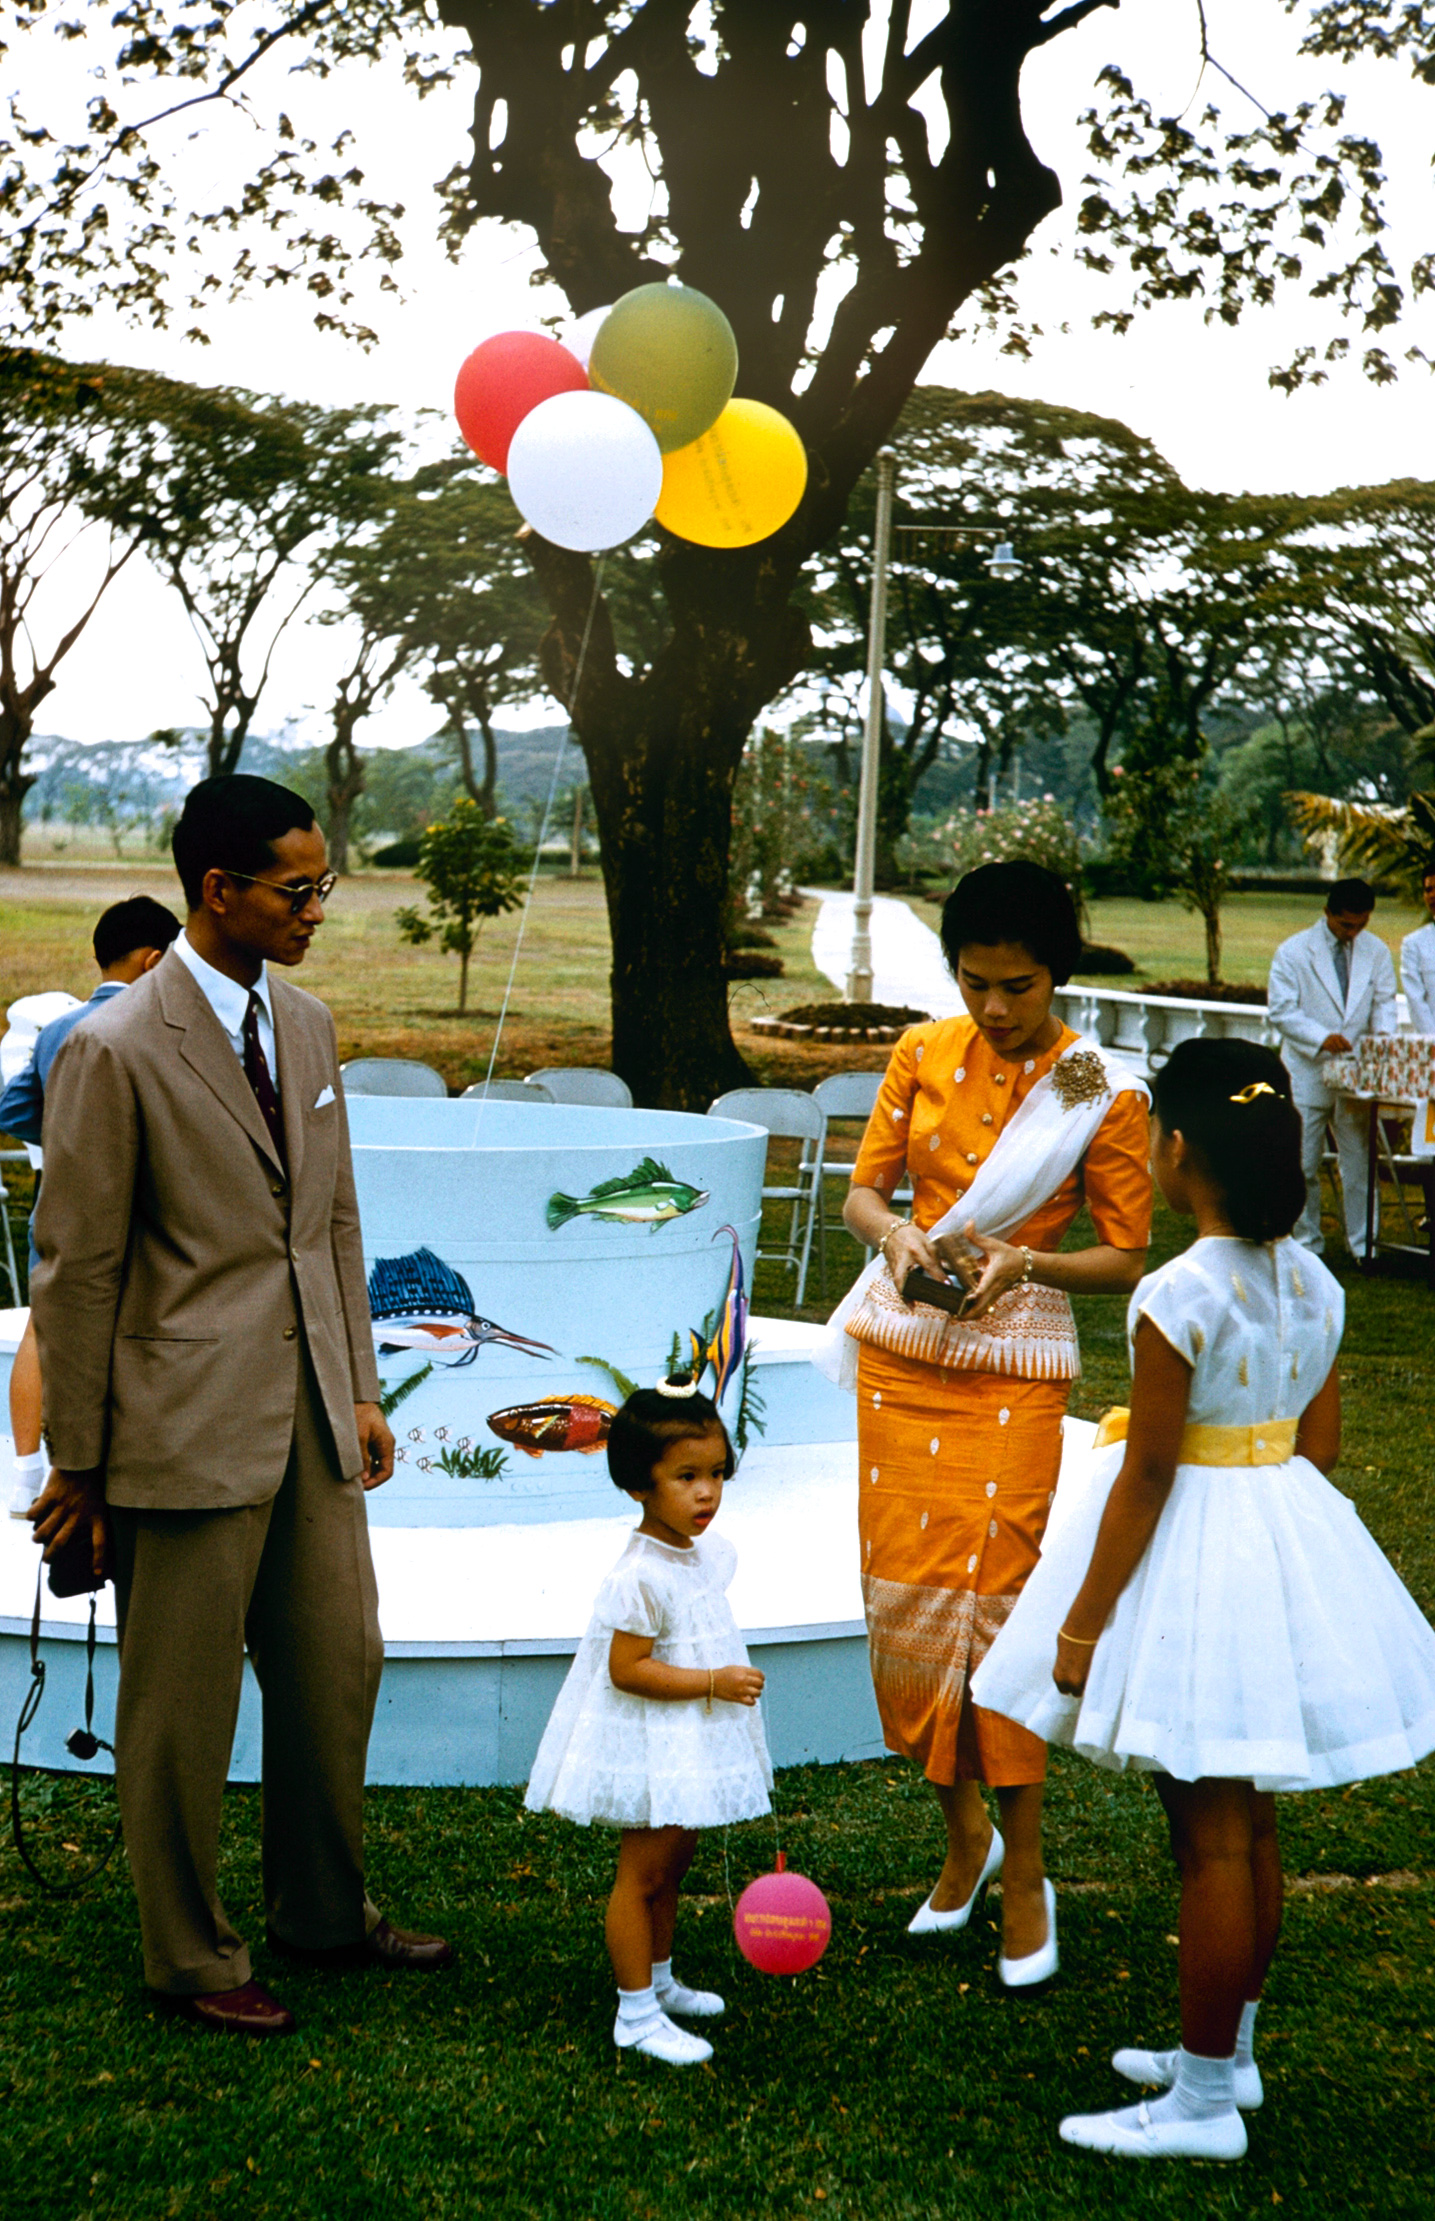 Thailand's King Bhumibol Adulyadej and family at a birthday party, 1960.